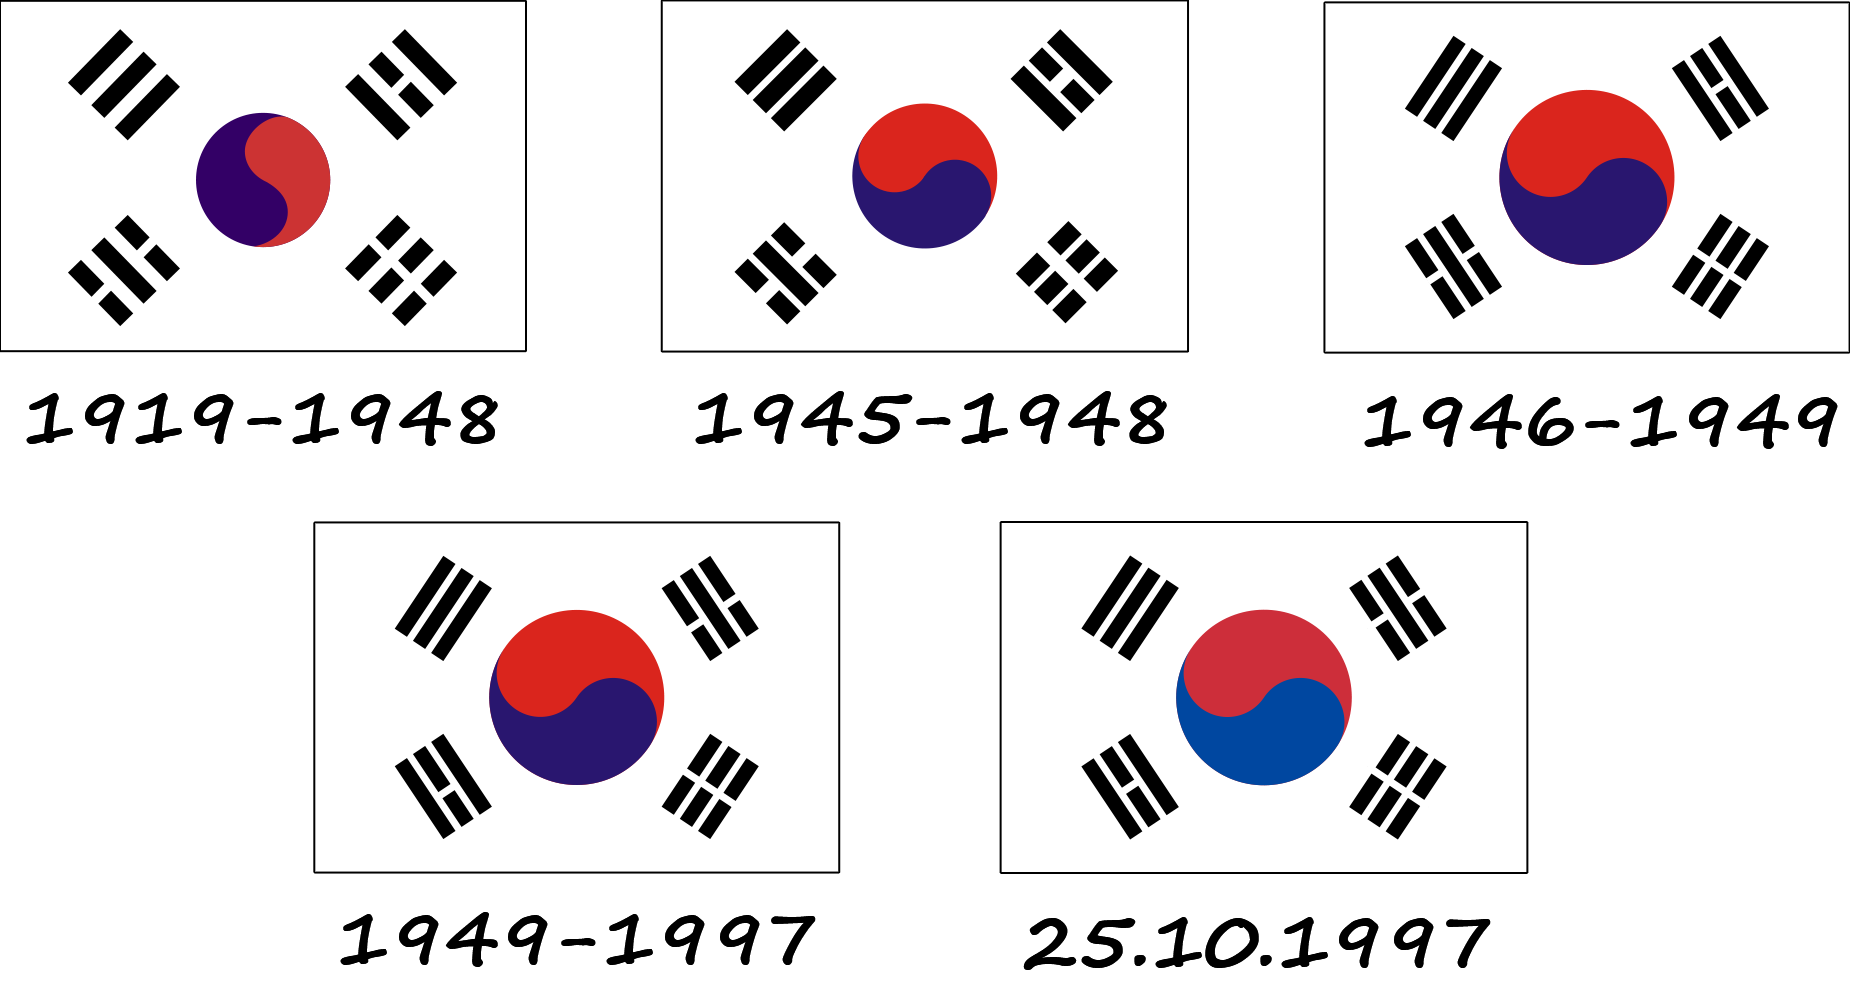 Evolution of the South Korean flag (Taegeukgi)